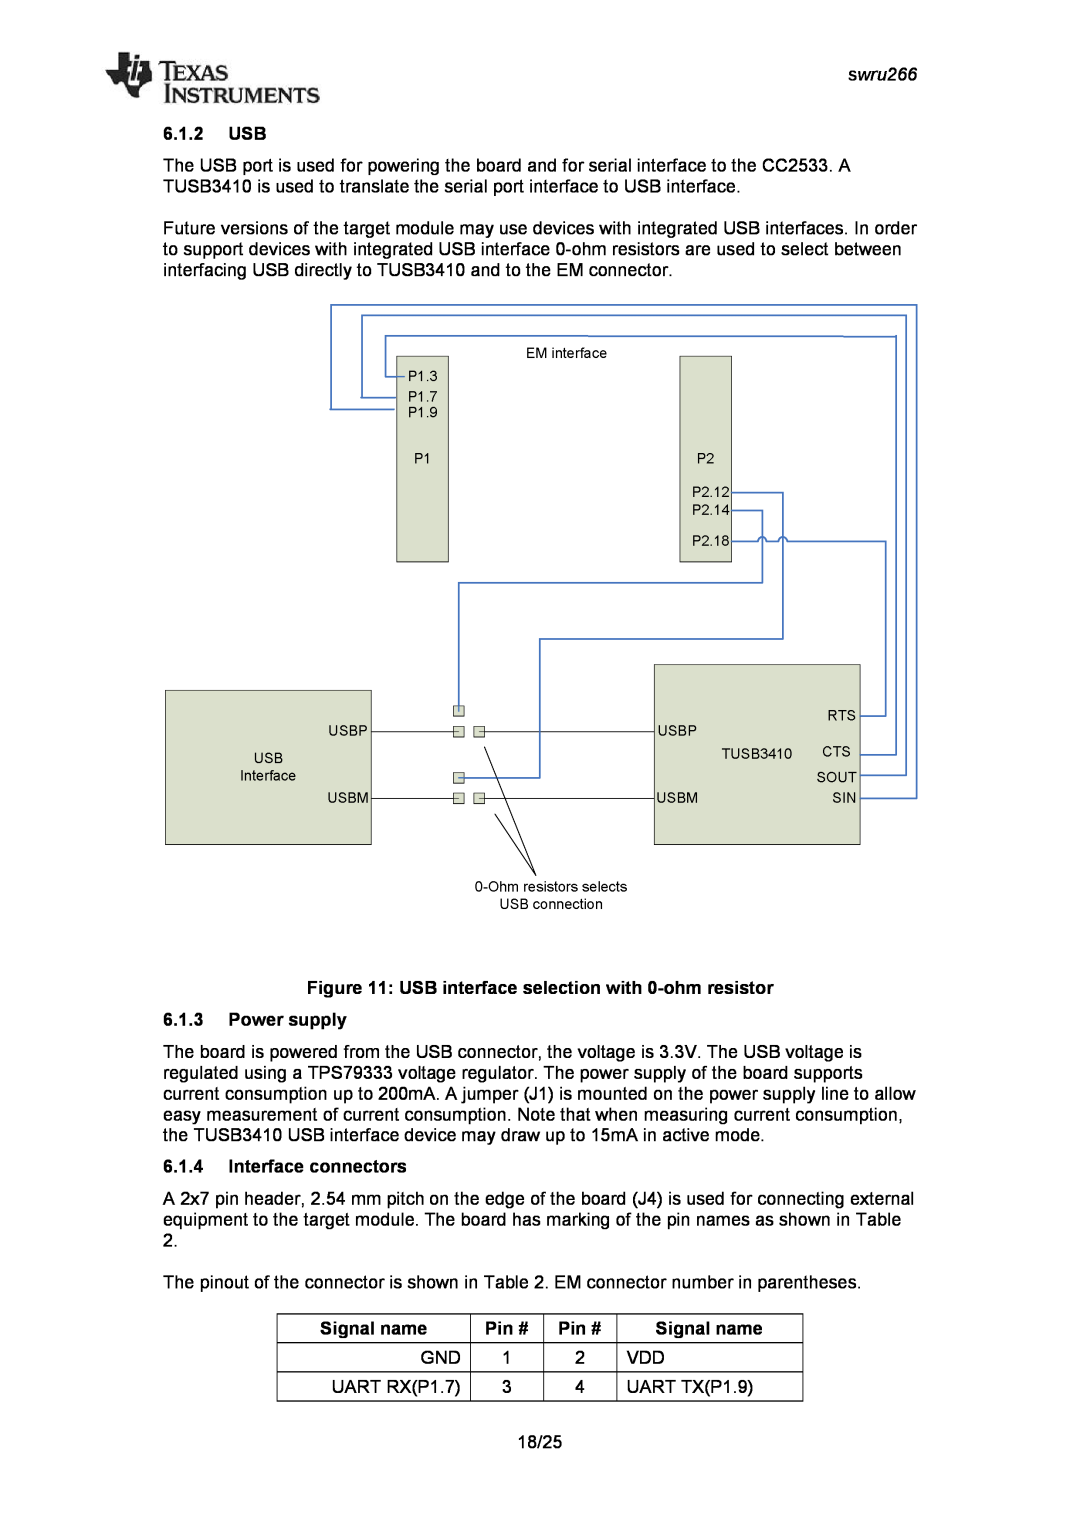 Texas Instruments CC2533 manual 6.1.2USB, 6.1.3Power supply, 6.1.4Interface connectors, Signal name, Pin #, swru266 